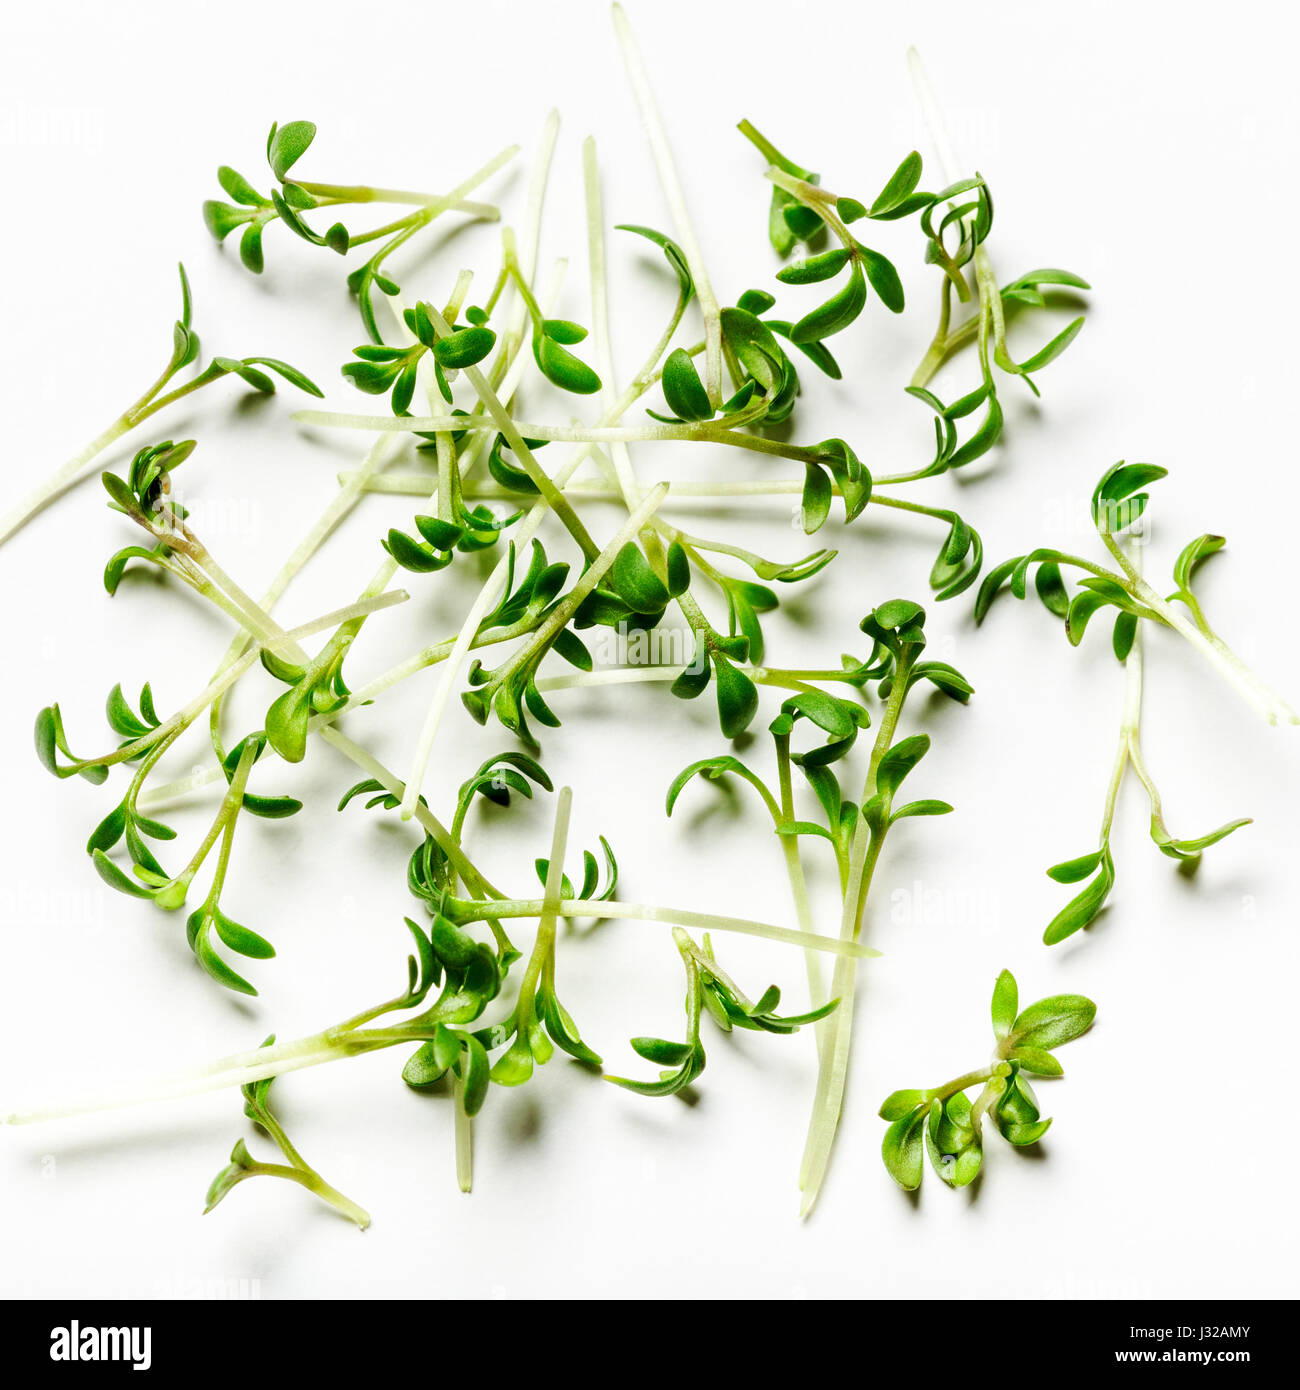 Ensalada de berro brotes verdes frescas sobre fondo blanco, vista superior, laicos plana Foto de stock